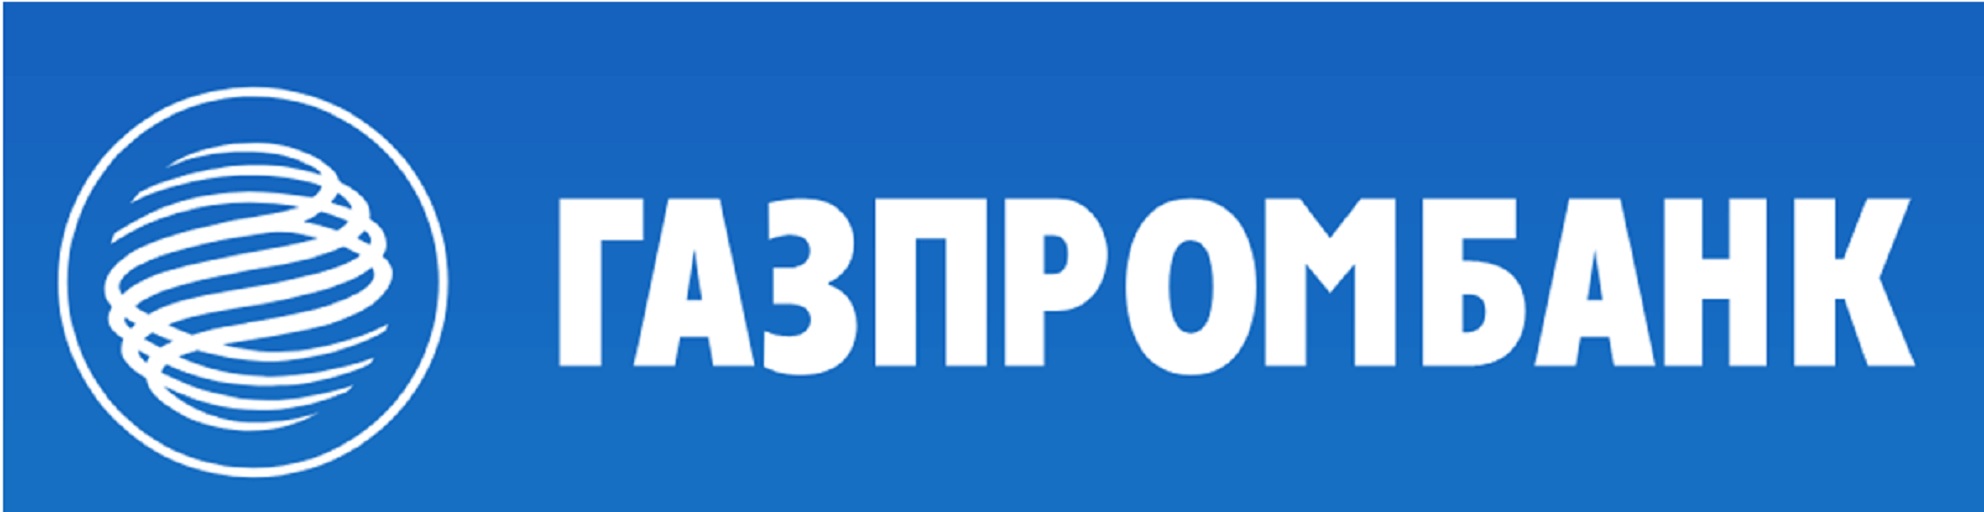 Логотип газпромбанка. Газпромбанк. Газпромбанк лого. Символ Газпромбанка. ОАО Газпромбанк.